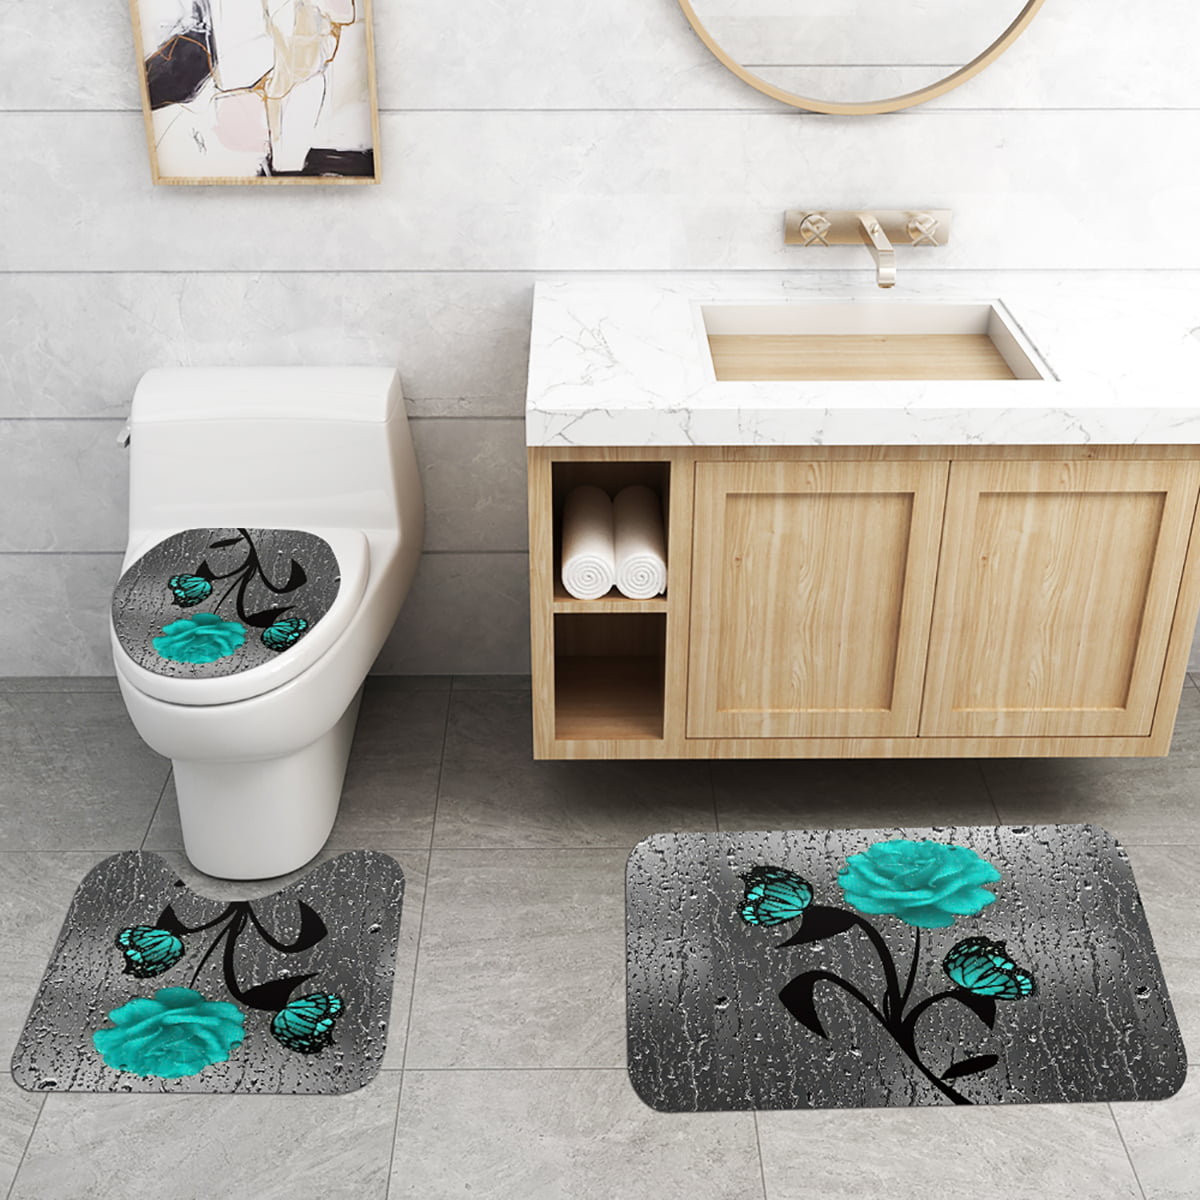 Blue Butterfly Art Shower Curtain Bath Mat Toilet Cover Rug Bathroom Decor Set 